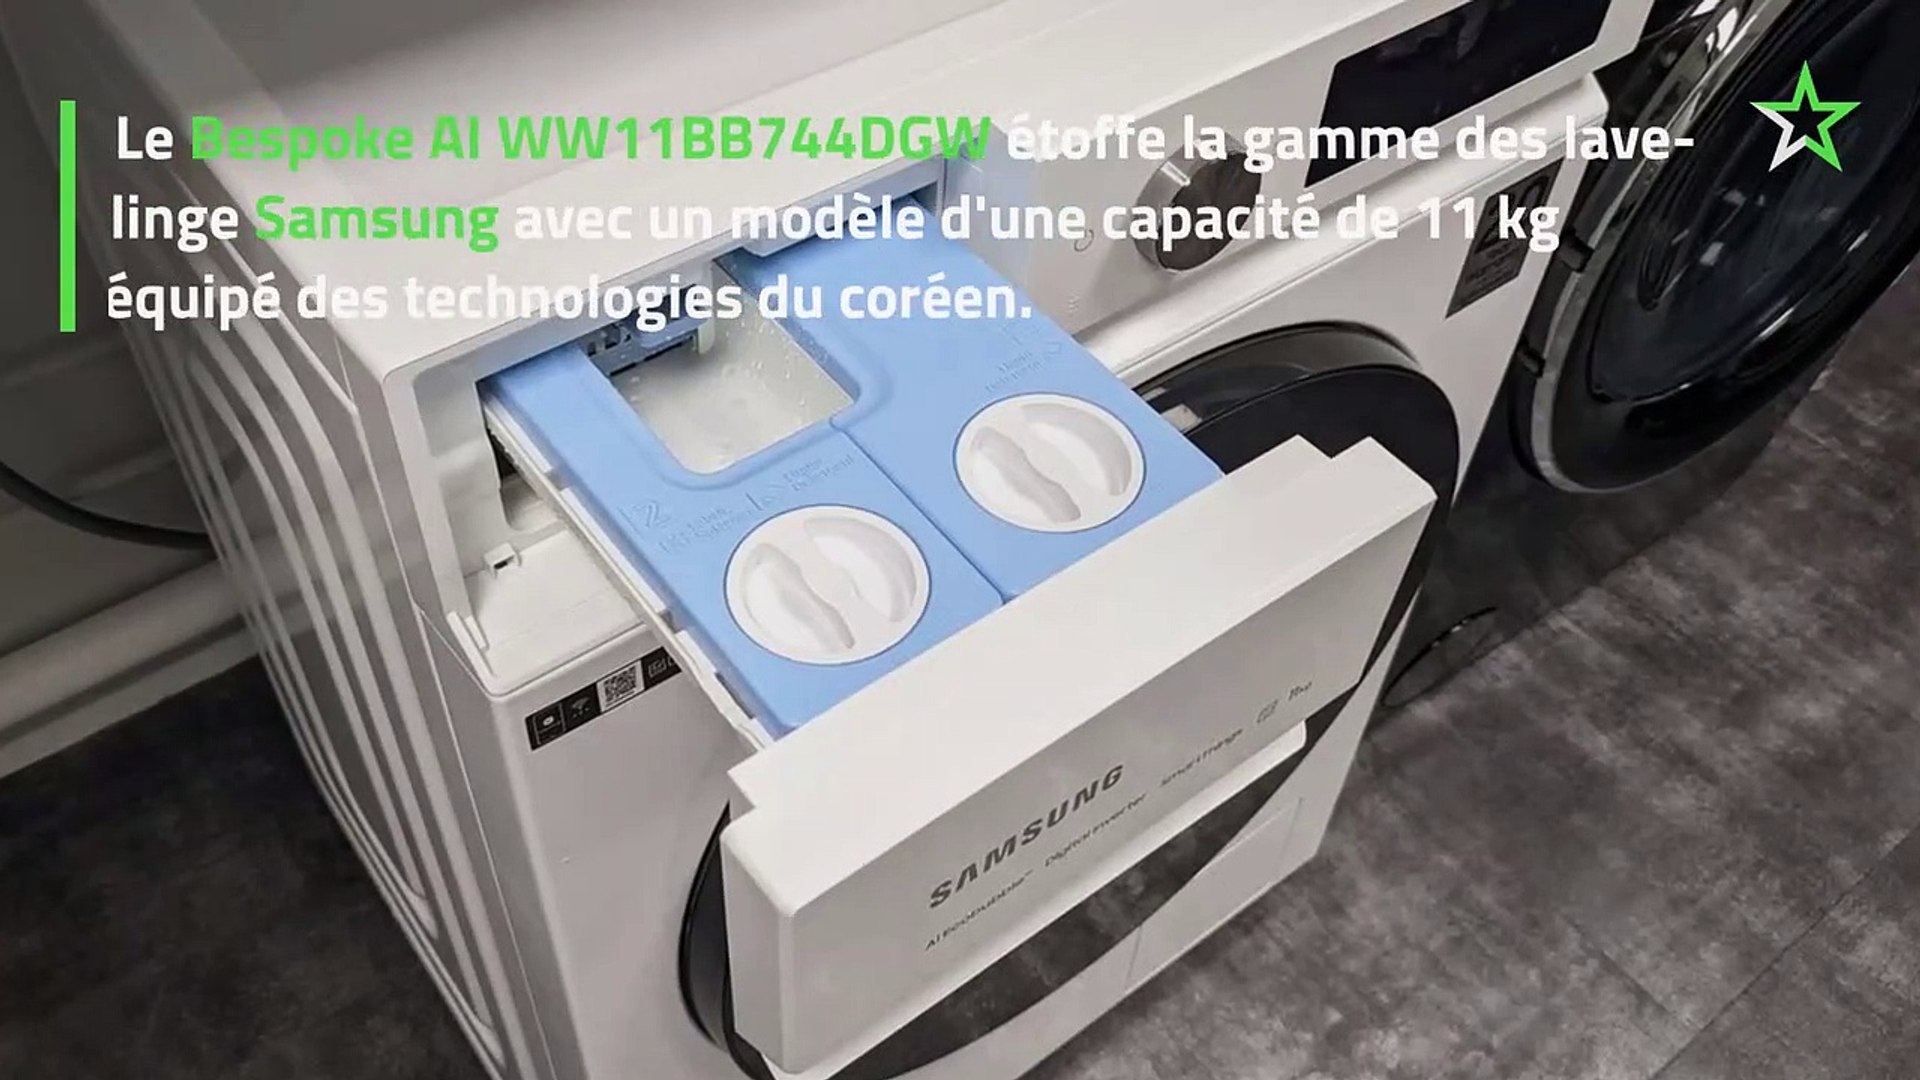 Lave-linge BESPOKE AI ecobubble™ 11kg - WW11BB744DGW